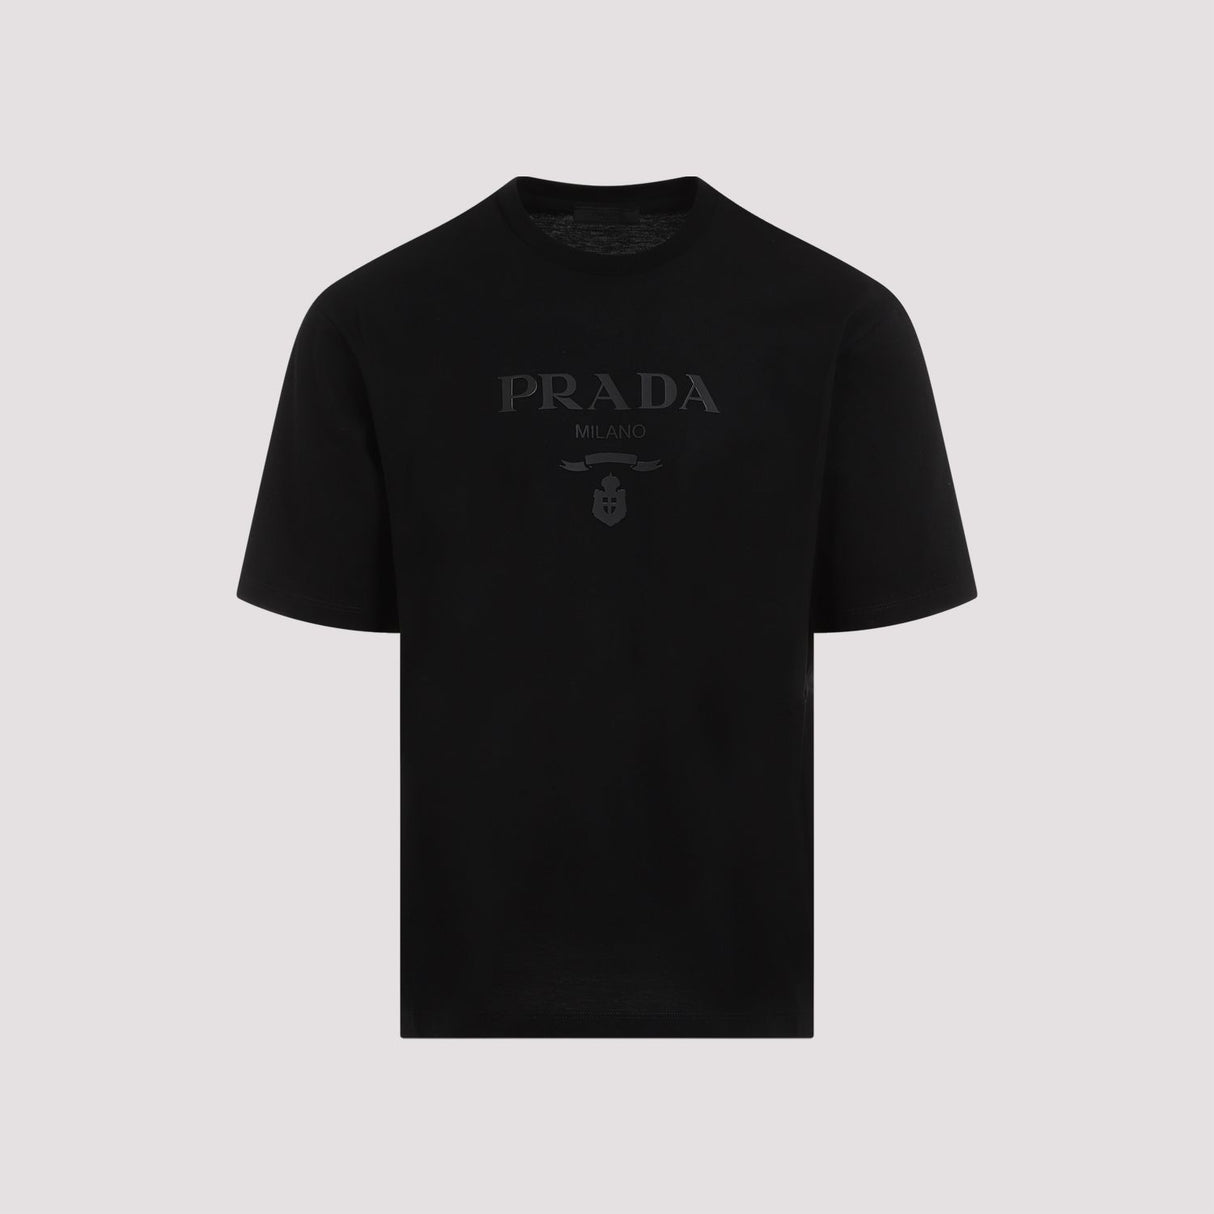 PRADA Classic Black T-Shirt with Tonal Logo Print